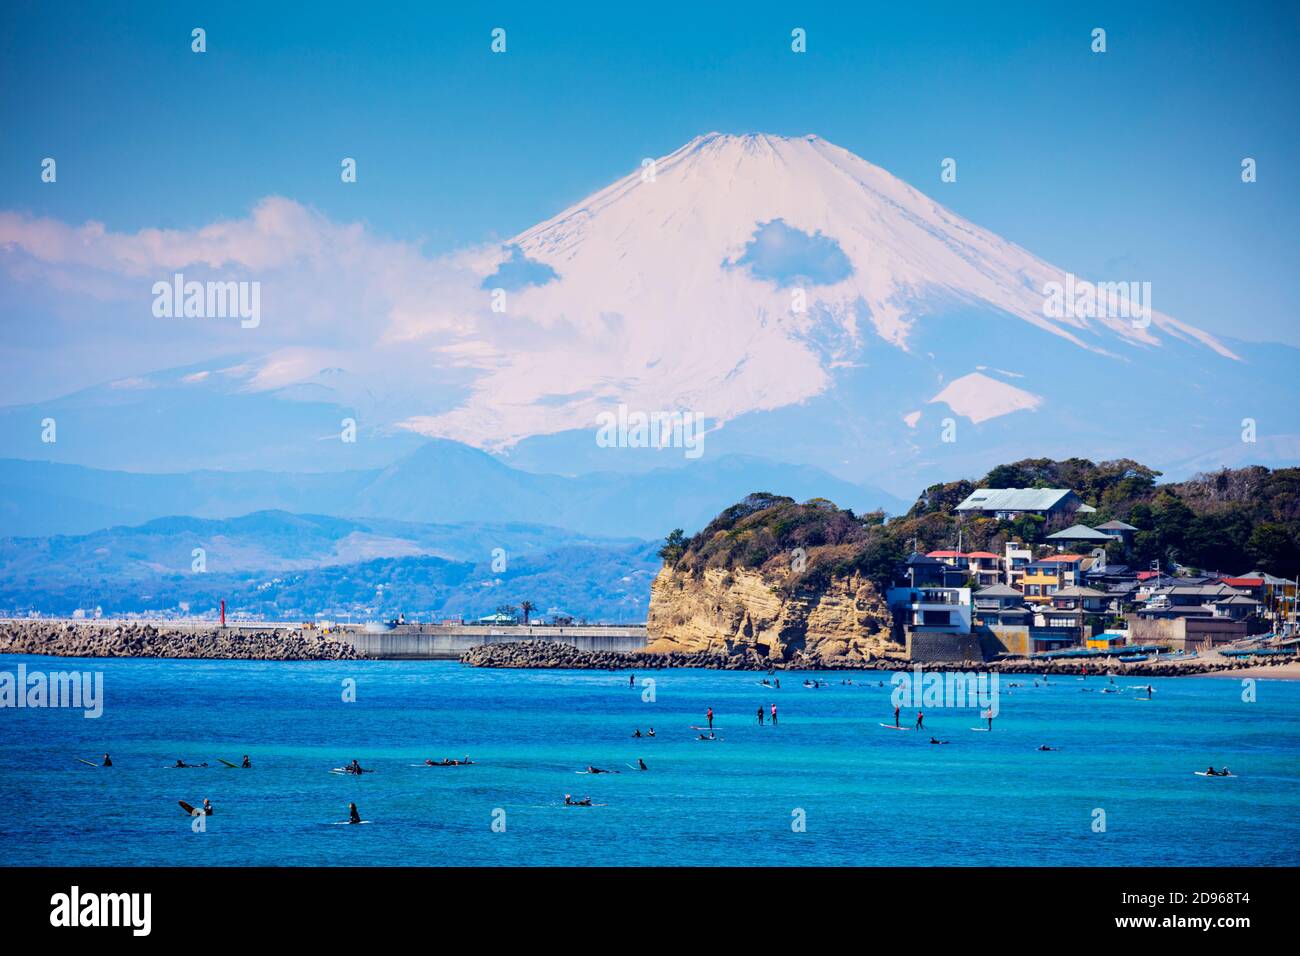 Asia, Japón, Honshu, prefectura de Kanagawa, surfistas cerca del Monte Fuji (3776m) Foto de stock